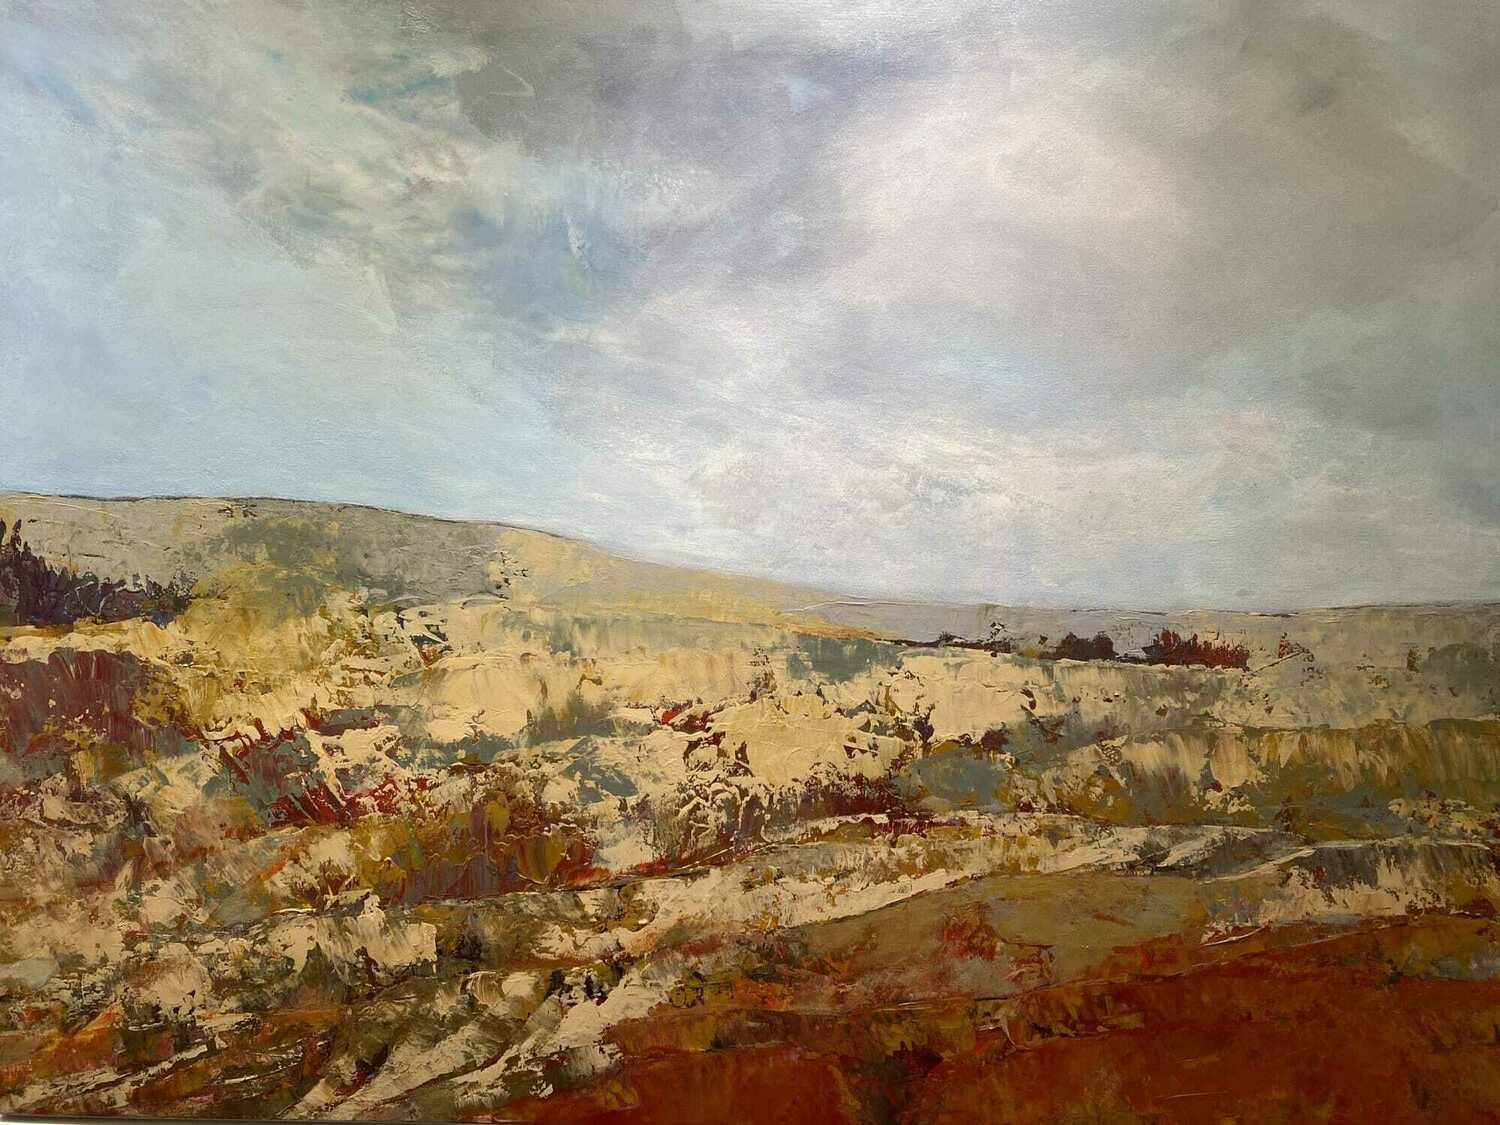 High Desert - Irma Soltonovich